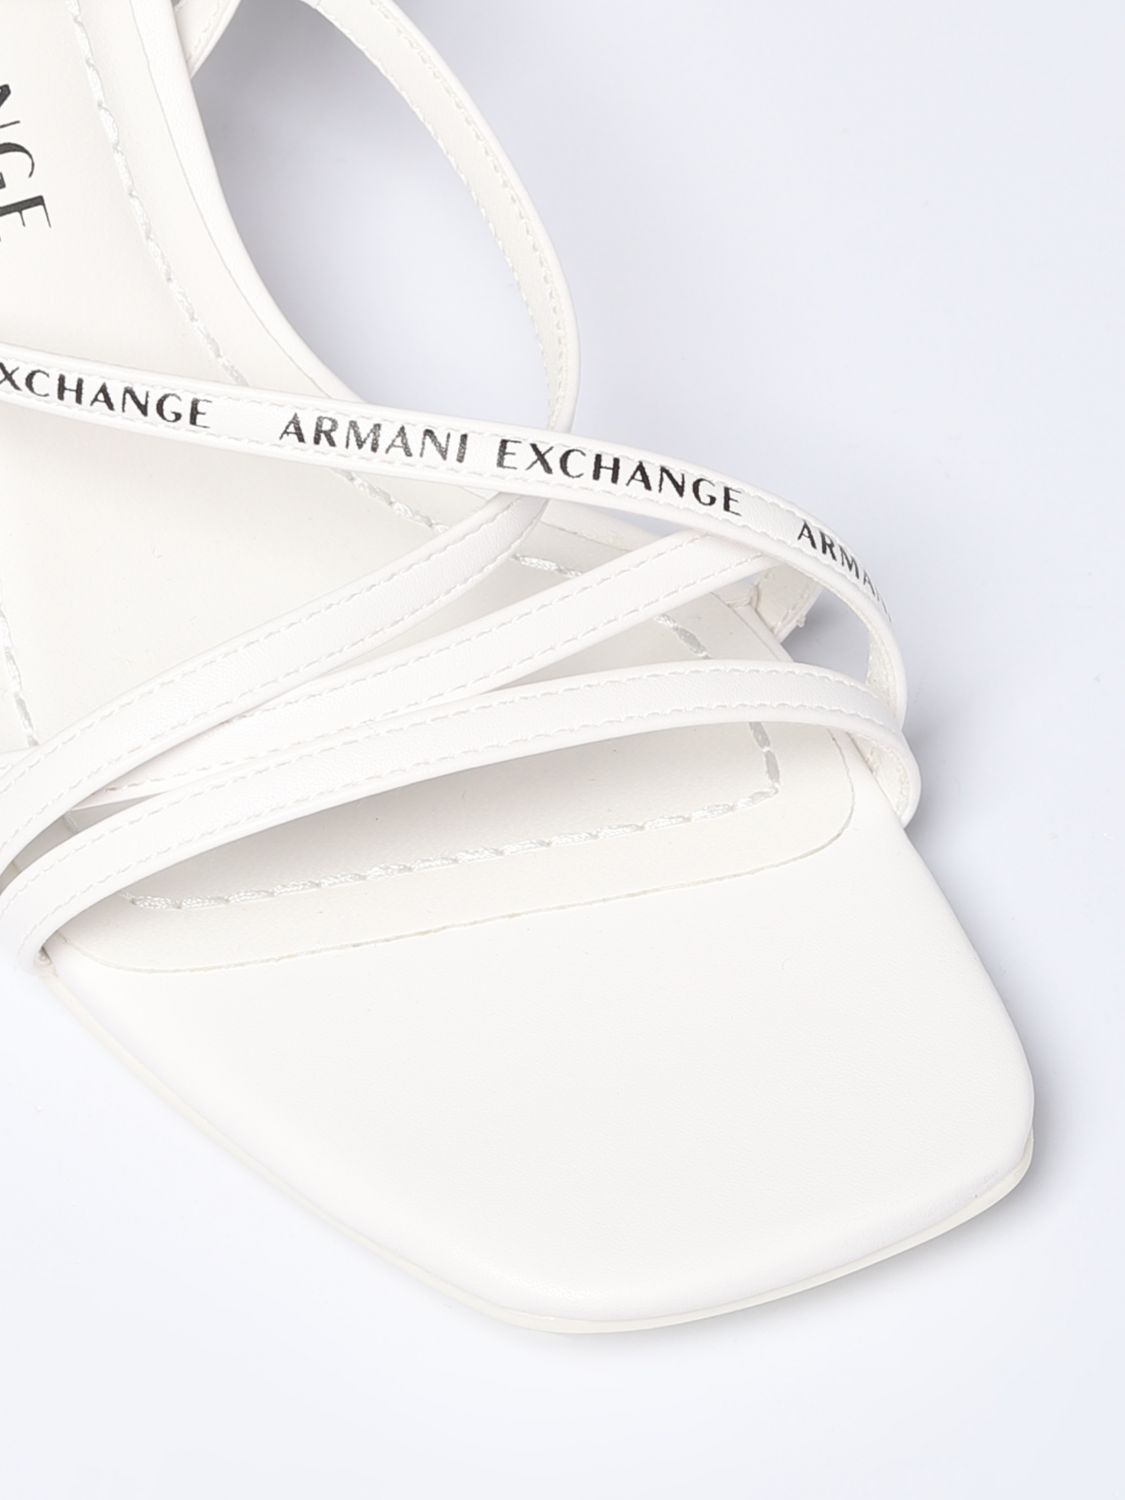 ik heb honger Aan boord grens ARMANI EXCHANGE: heeled sandals for woman - White | Armani Exchange heeled  sandals XDP033XV688 online on GIGLIO.COM